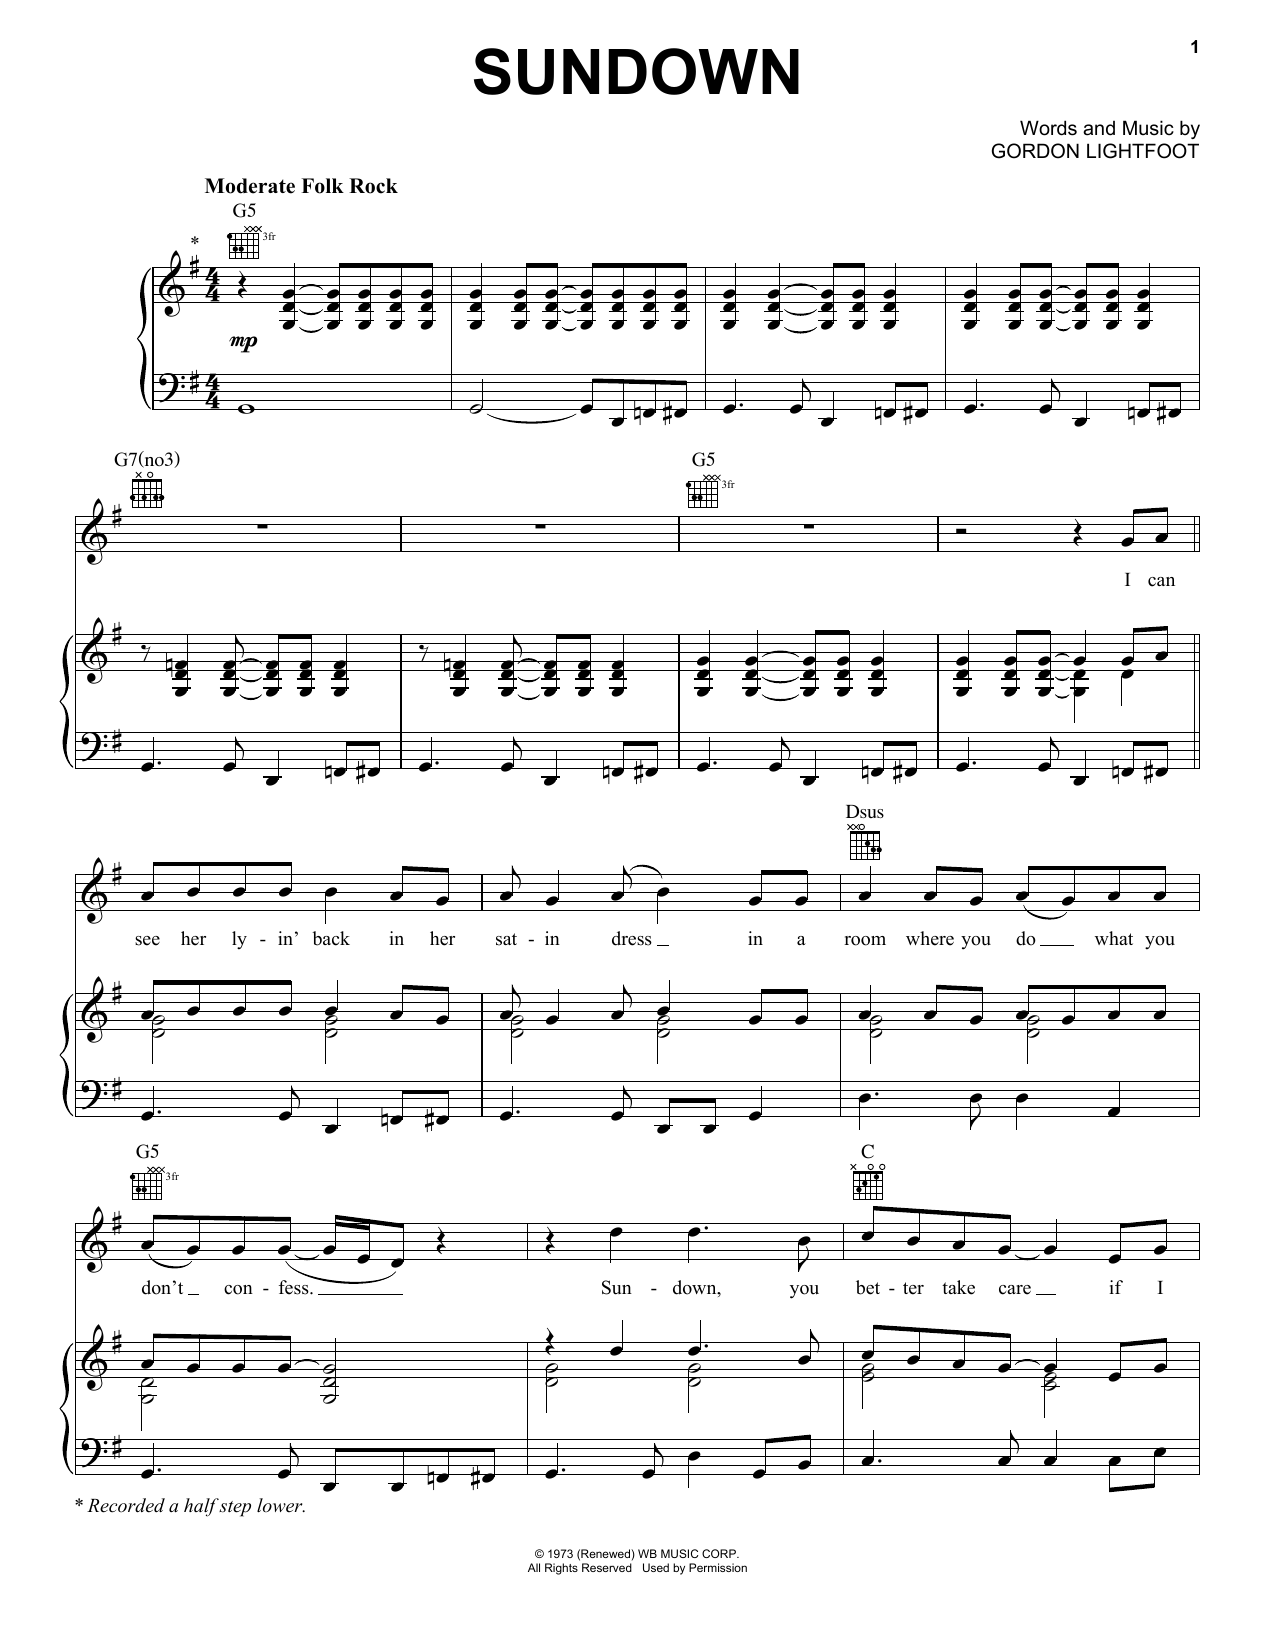 Download Gordon Lightfoot Sundown Sheet Music and learn how to play Baritone Ukulele PDF digital score in minutes